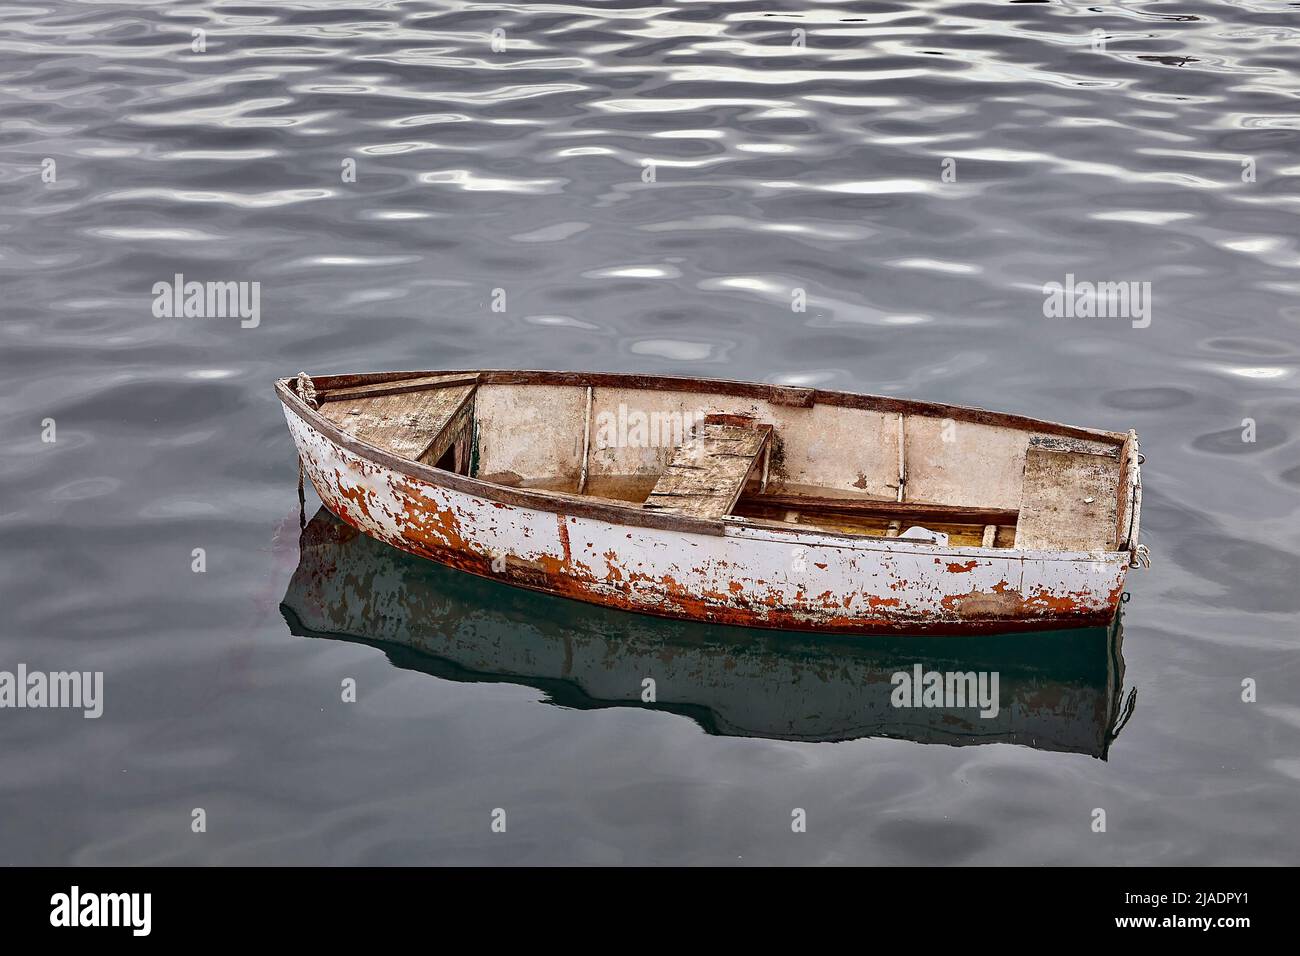 Fishing boat on the sea Stock Photo